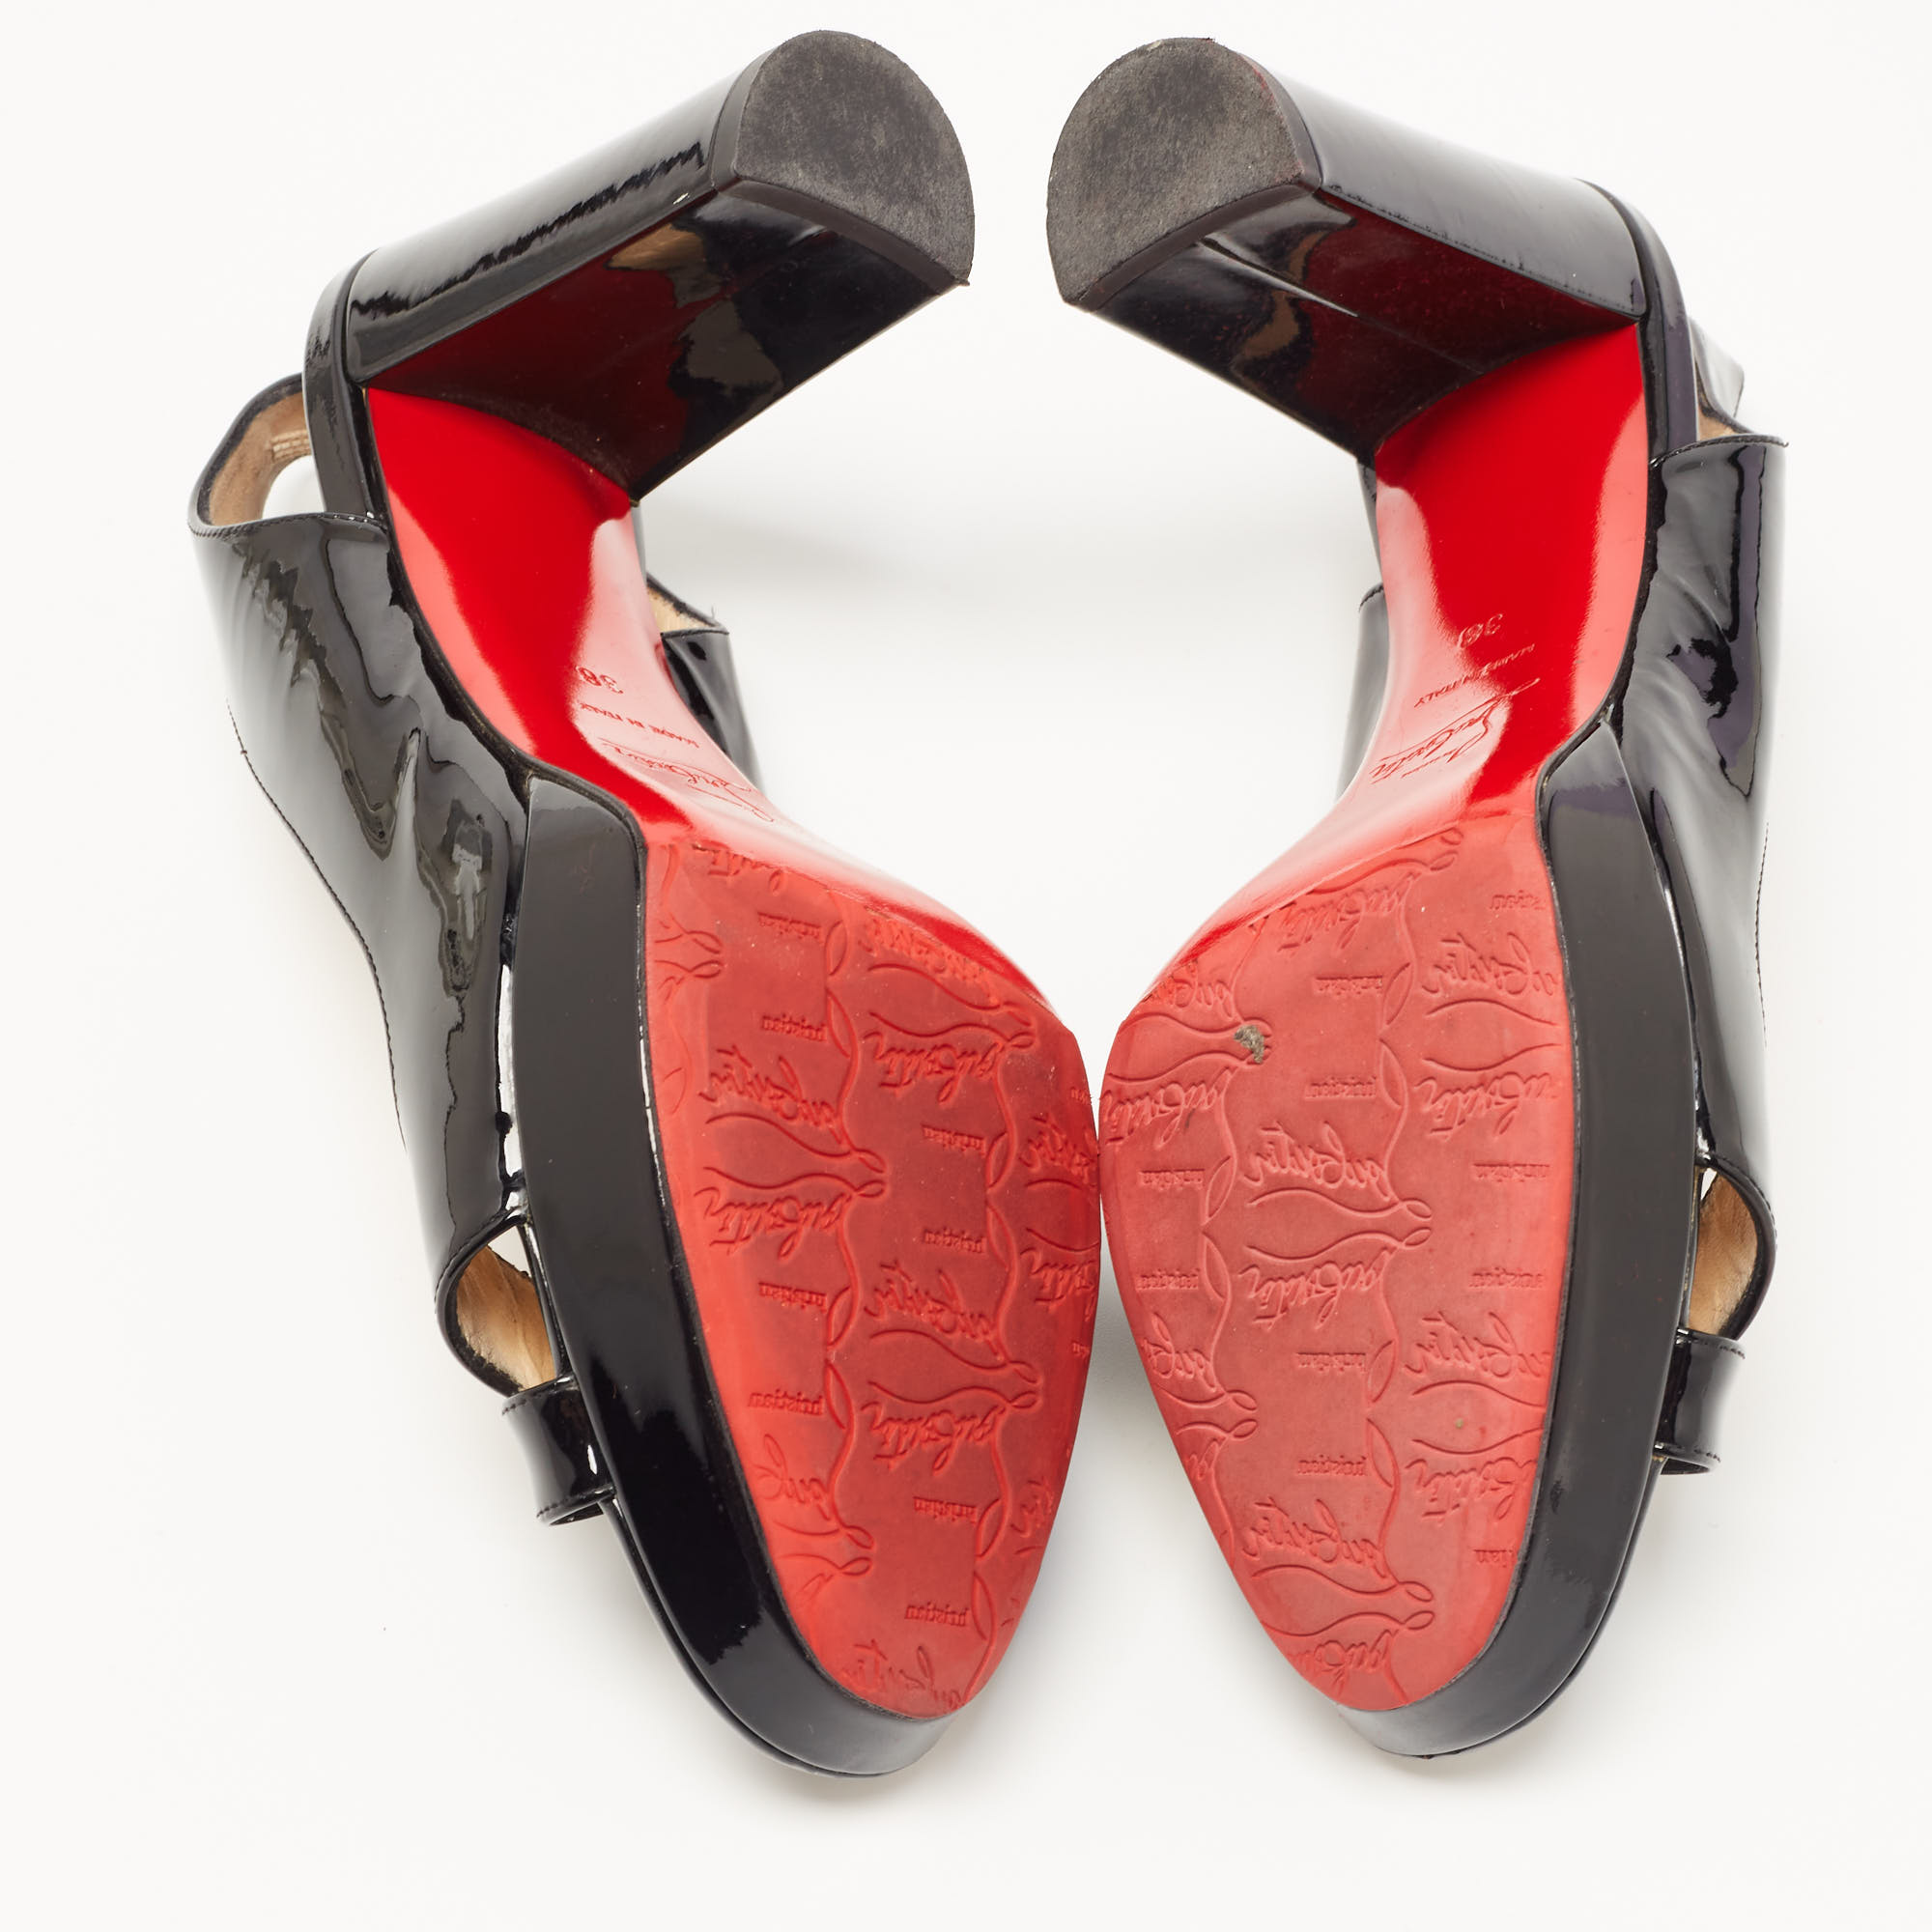 Christian Louboutin Black Patent Crisscross Slingback Sandals Size 38